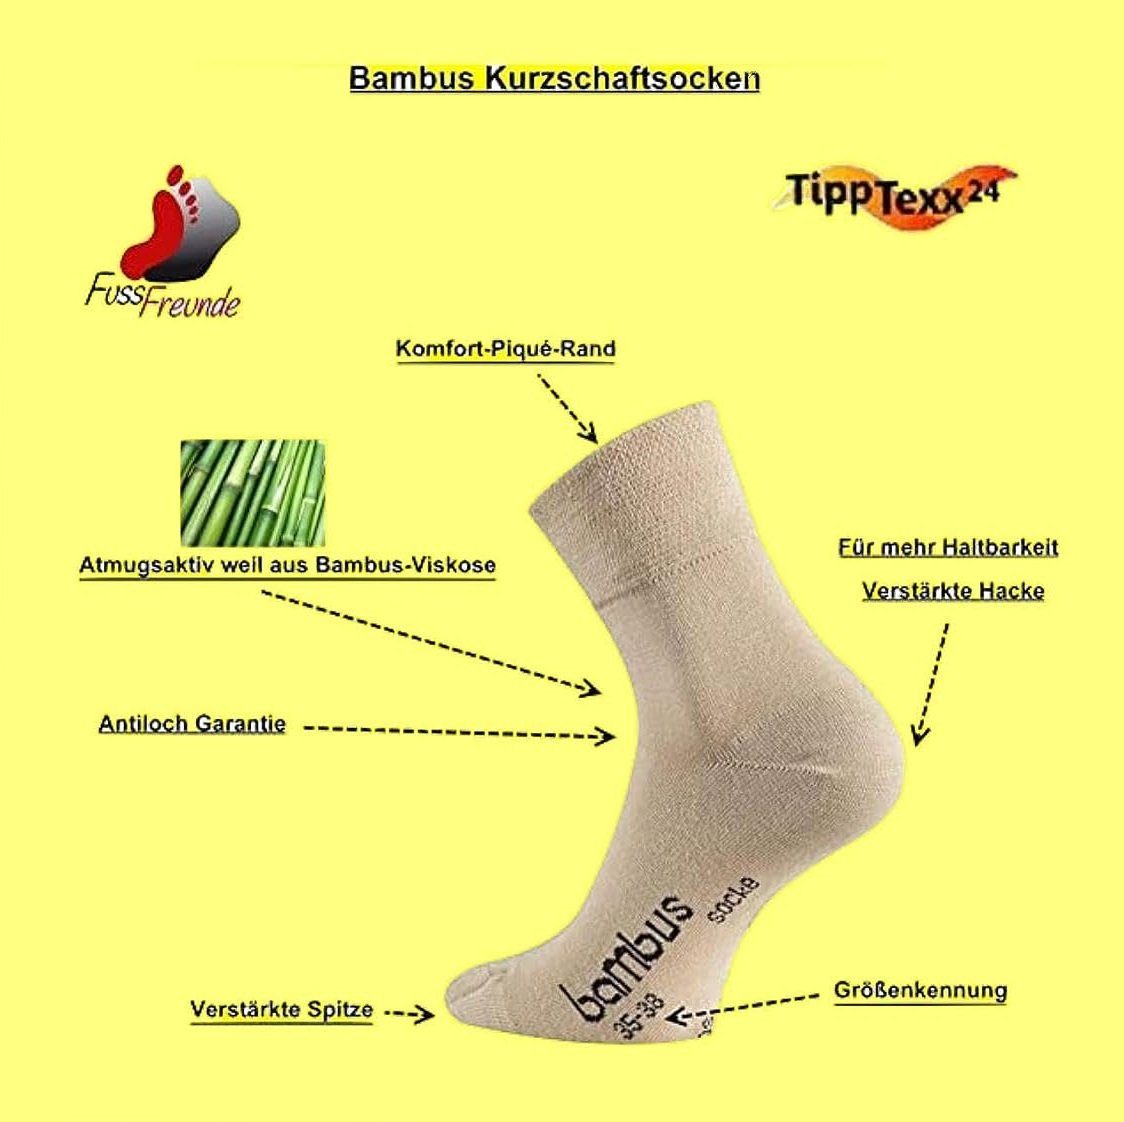 ANTI-LOCH-GARANTIE 6 FussFreunde Paar Socken Weiß Kurzsocken und Bambus-Socken, kurze Quarter